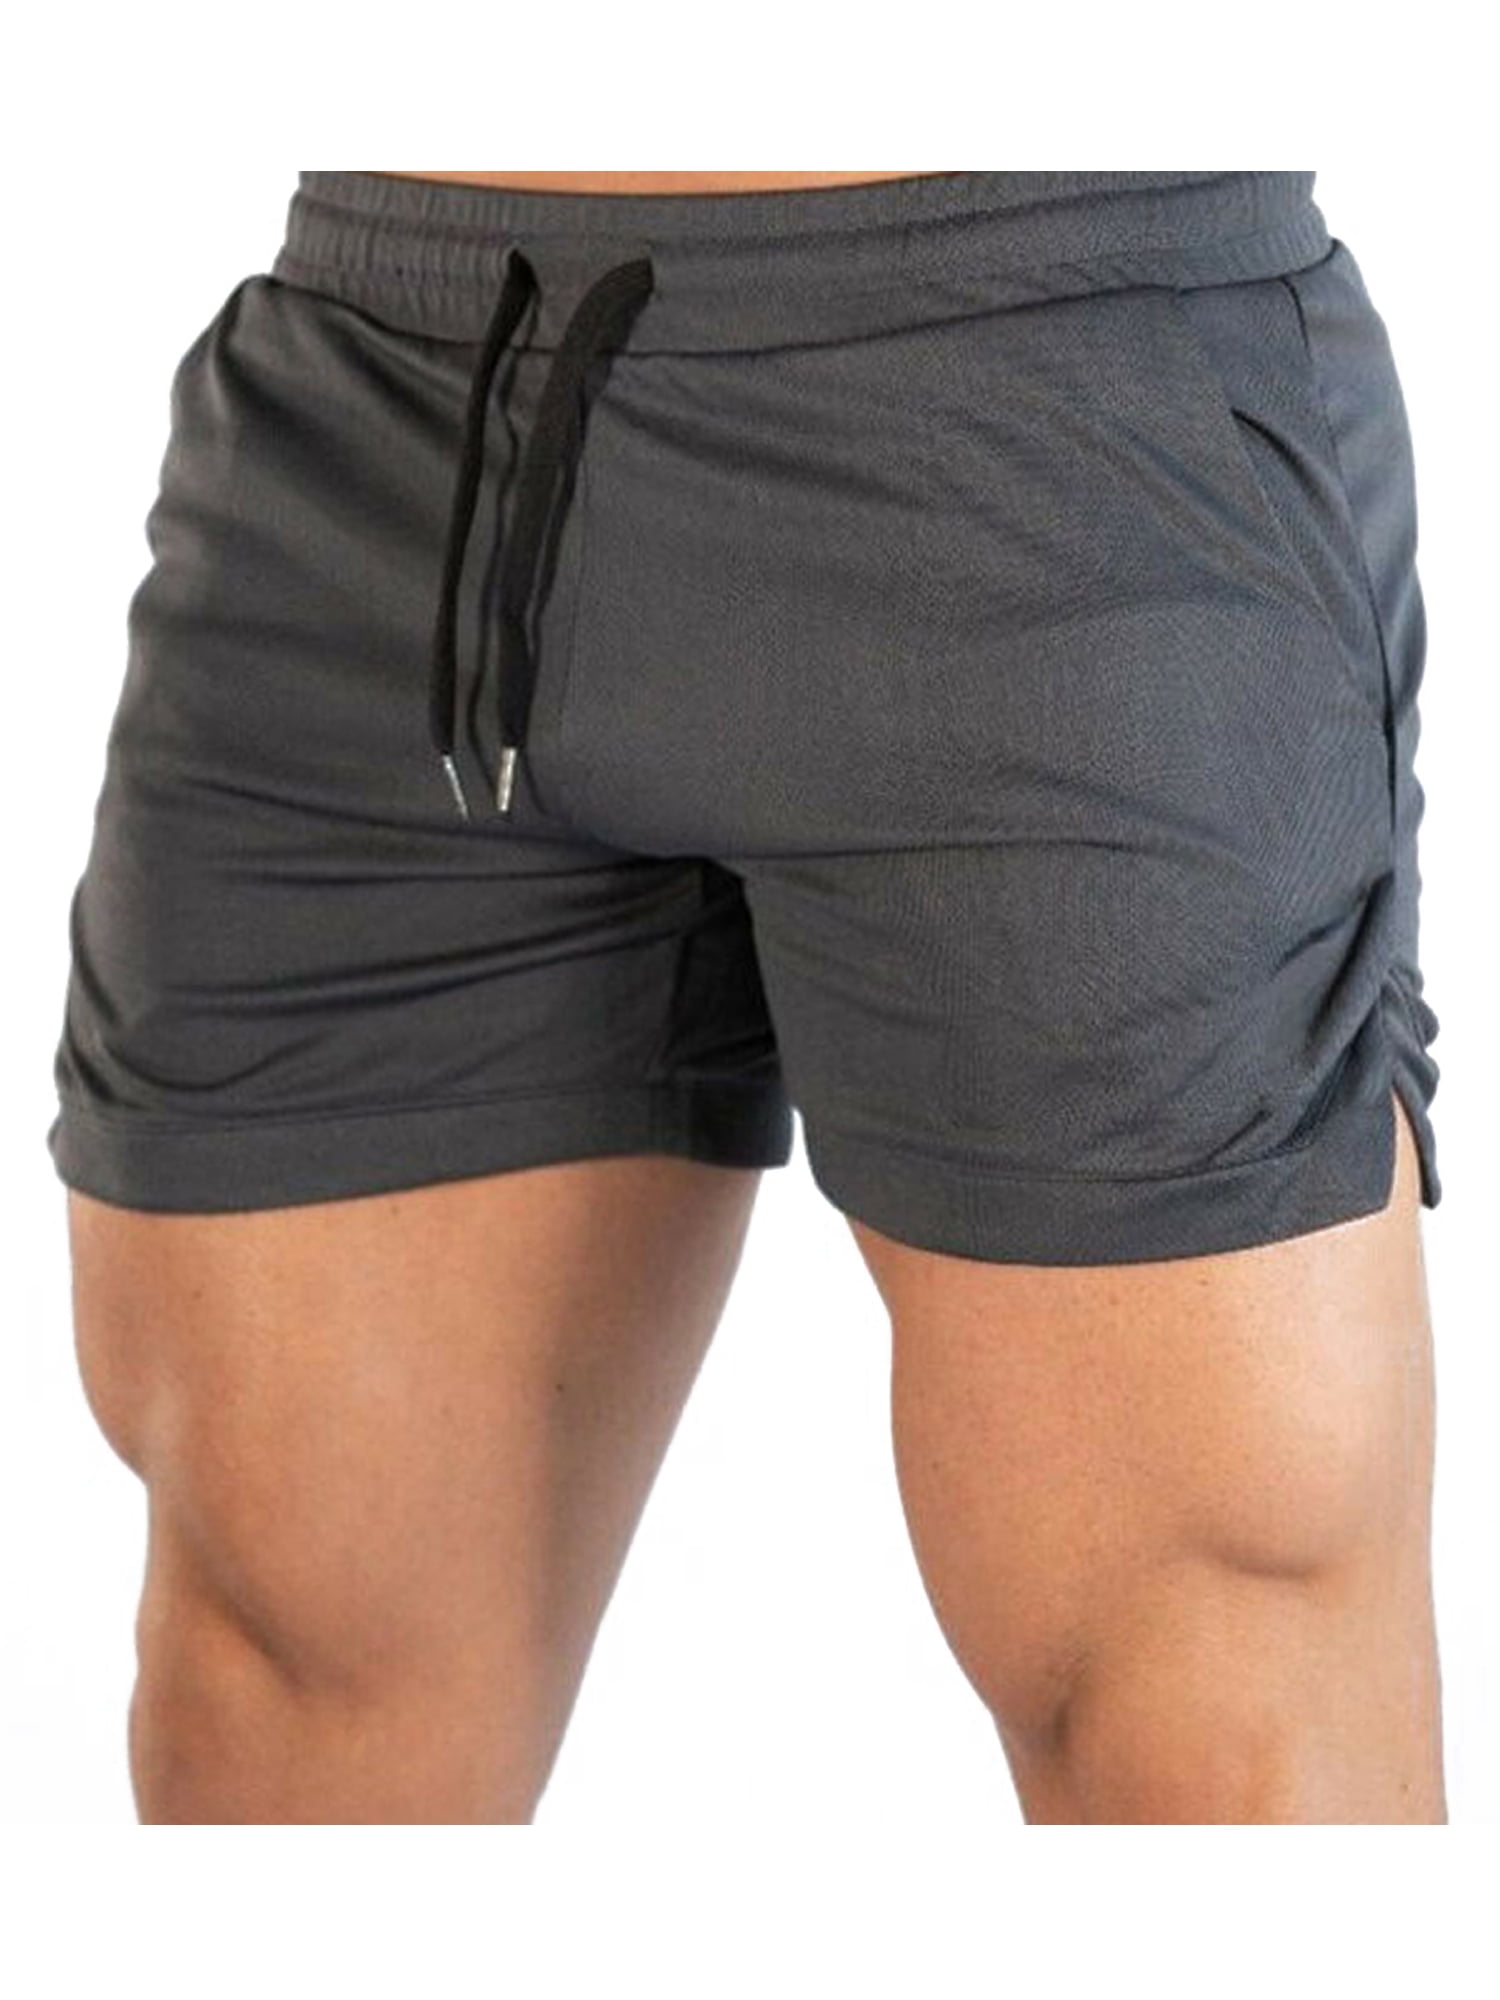 Buy Veirdo Men Shorts Cotton, Half Pants for Cycling, Basketball, Gym,  Swimming, Bermuda Sports Shorts, Running Shorts for Men & Boys, Chadda for Men  Shorts Casual Wear (S) at Amazon.in